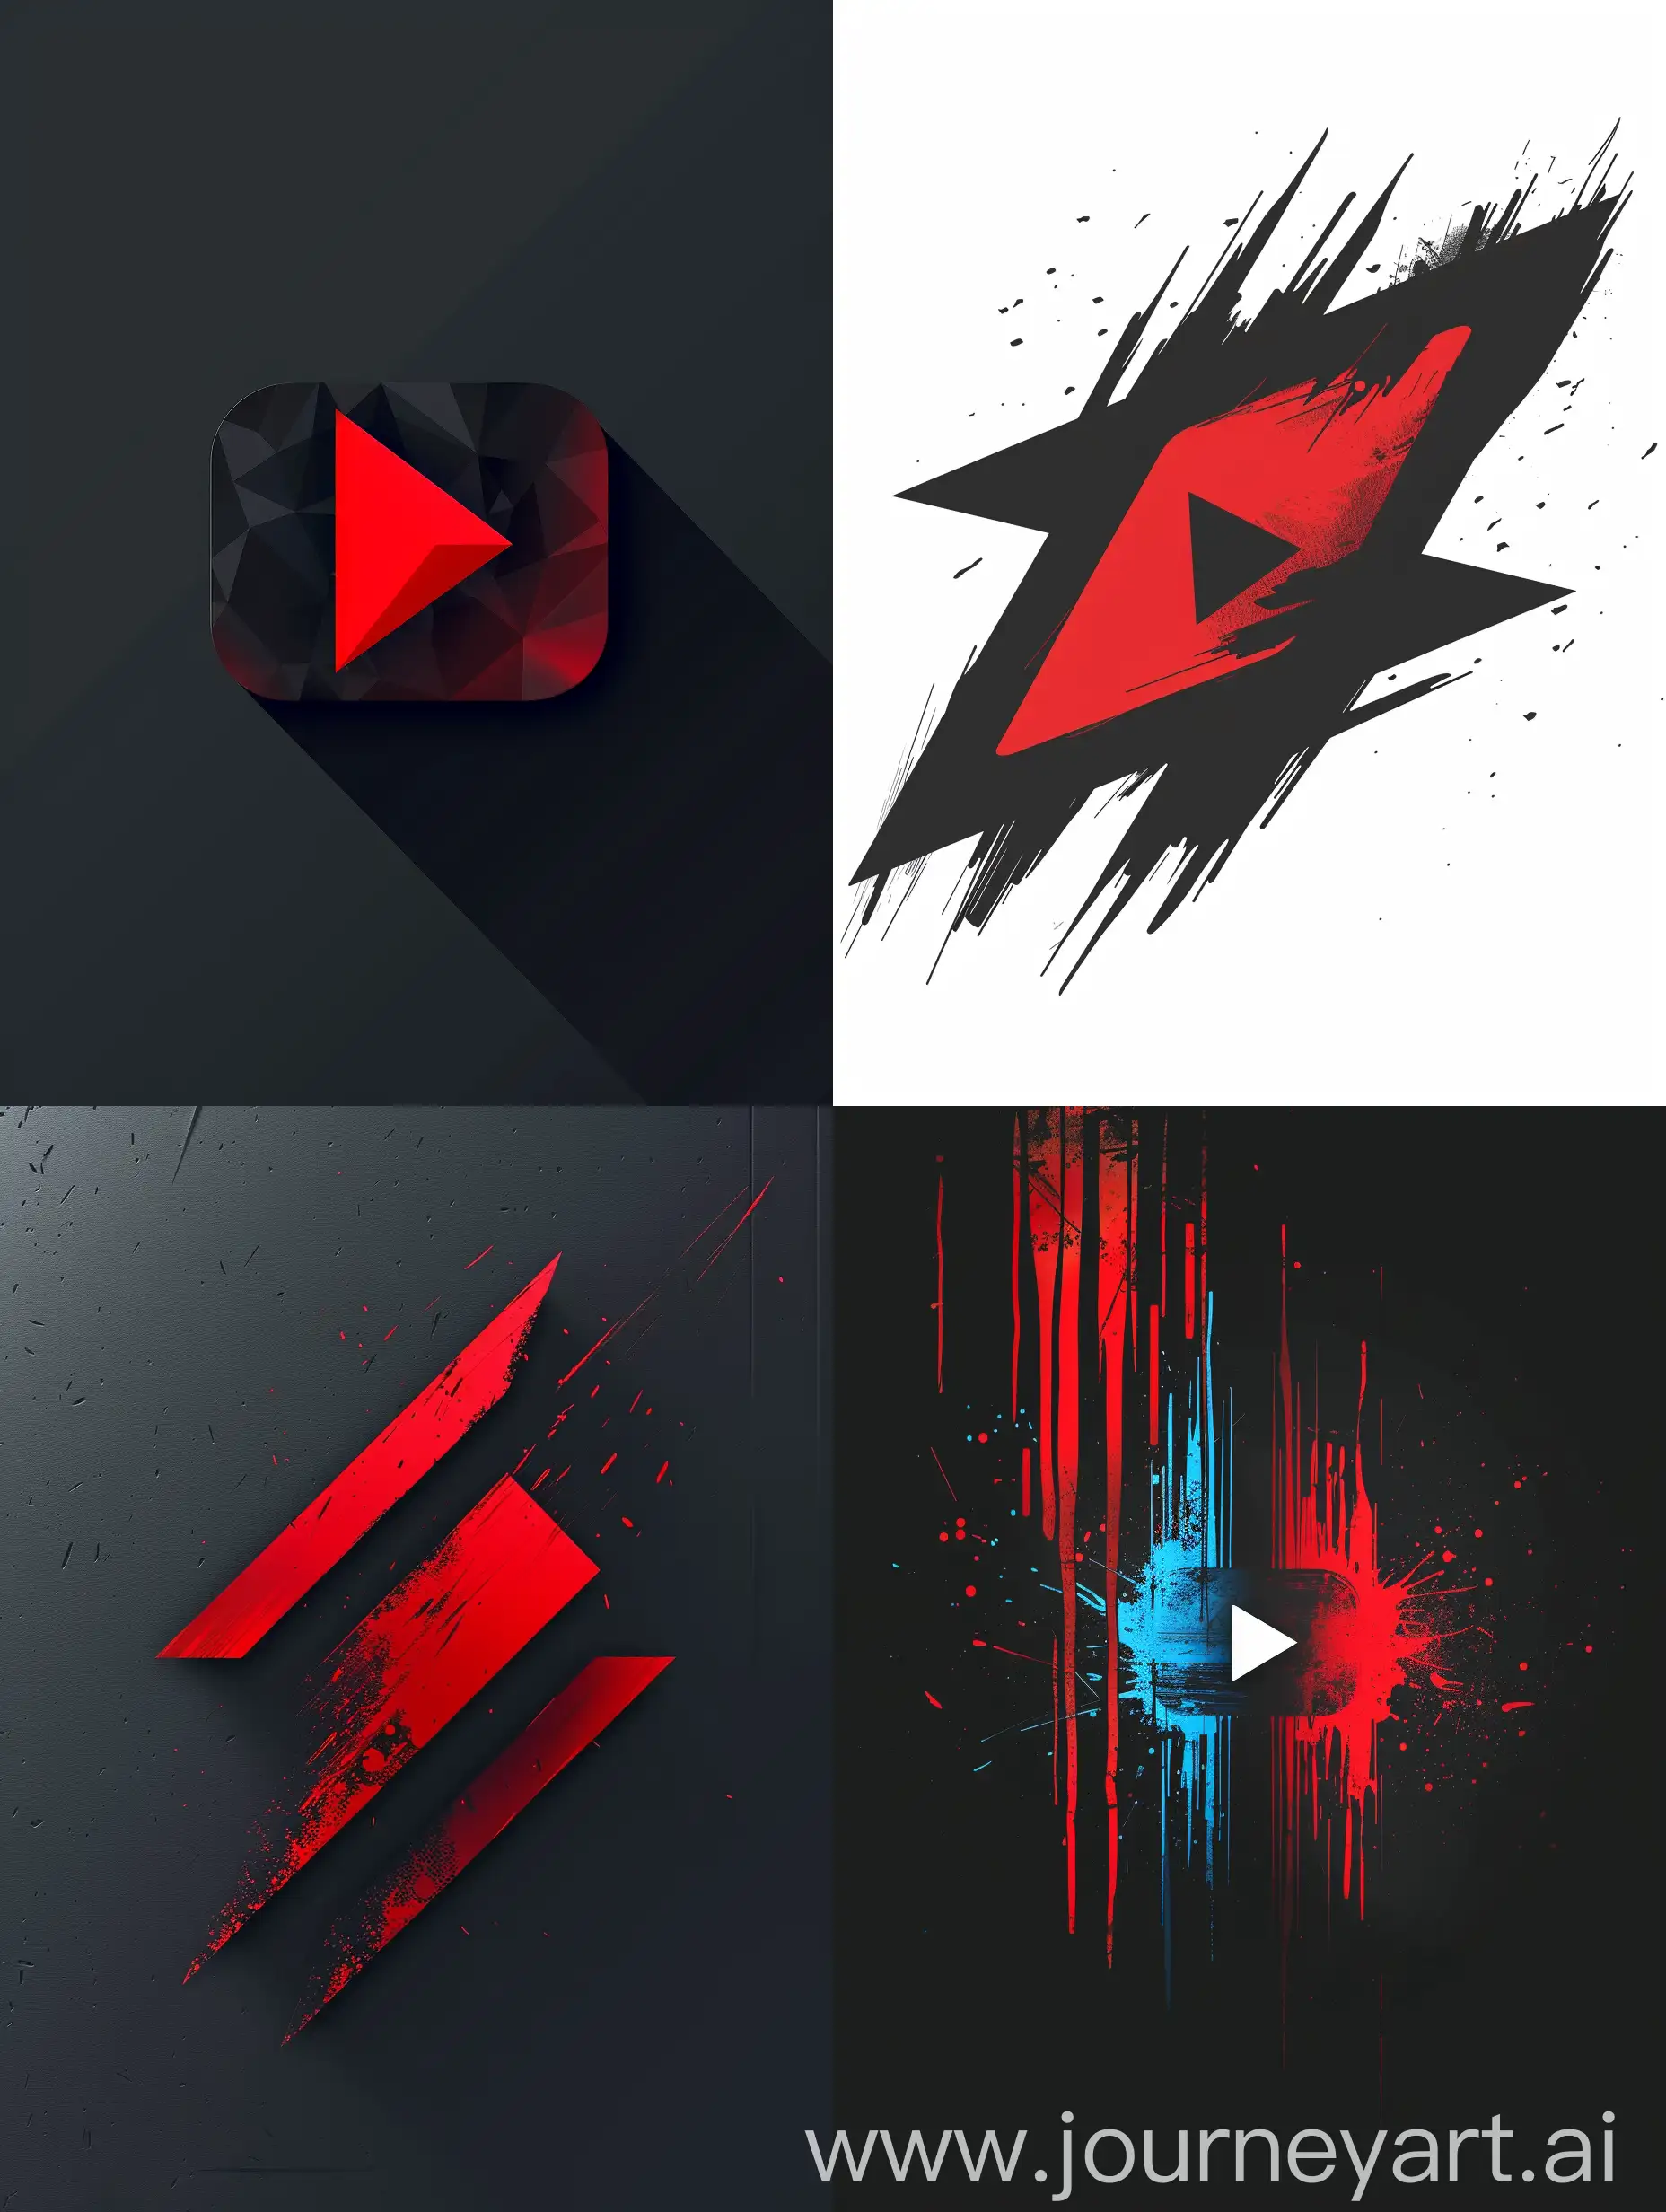 Professional-YouTube-Logo-Design-Sliced-Editor-Version-6-AR-34